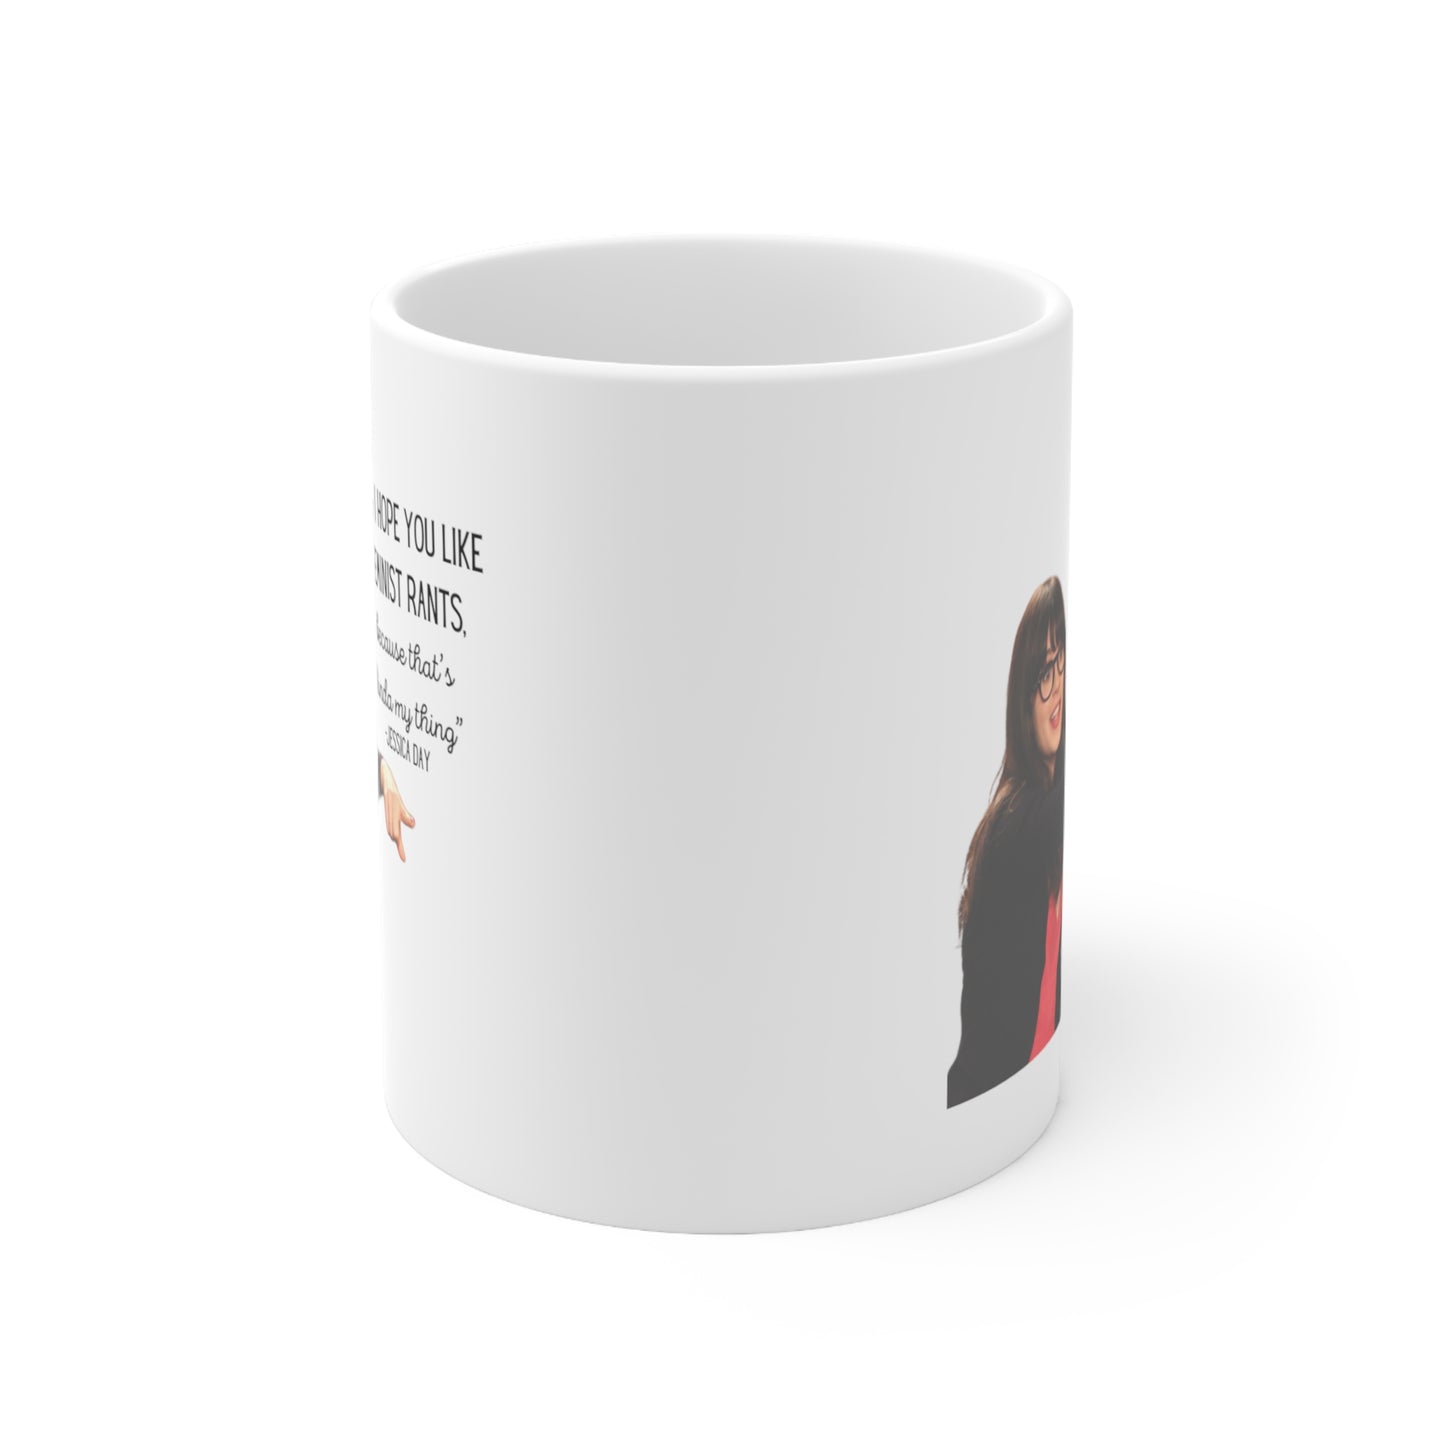 Jessica Day "Feminist Rant" Ceramic Mug 15oz // New Girl mug